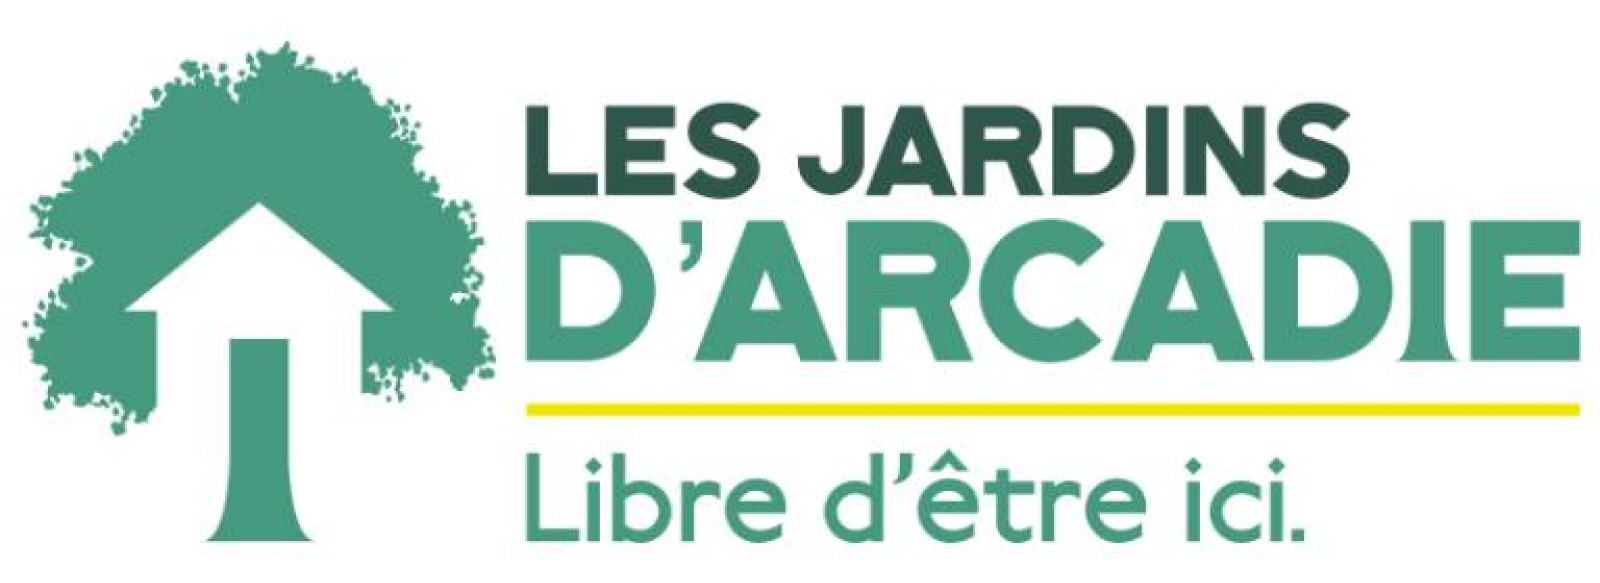 MEUBLES - LES JARDINS D'ARCADIE, RESIDENCE SERVICES SENIORS